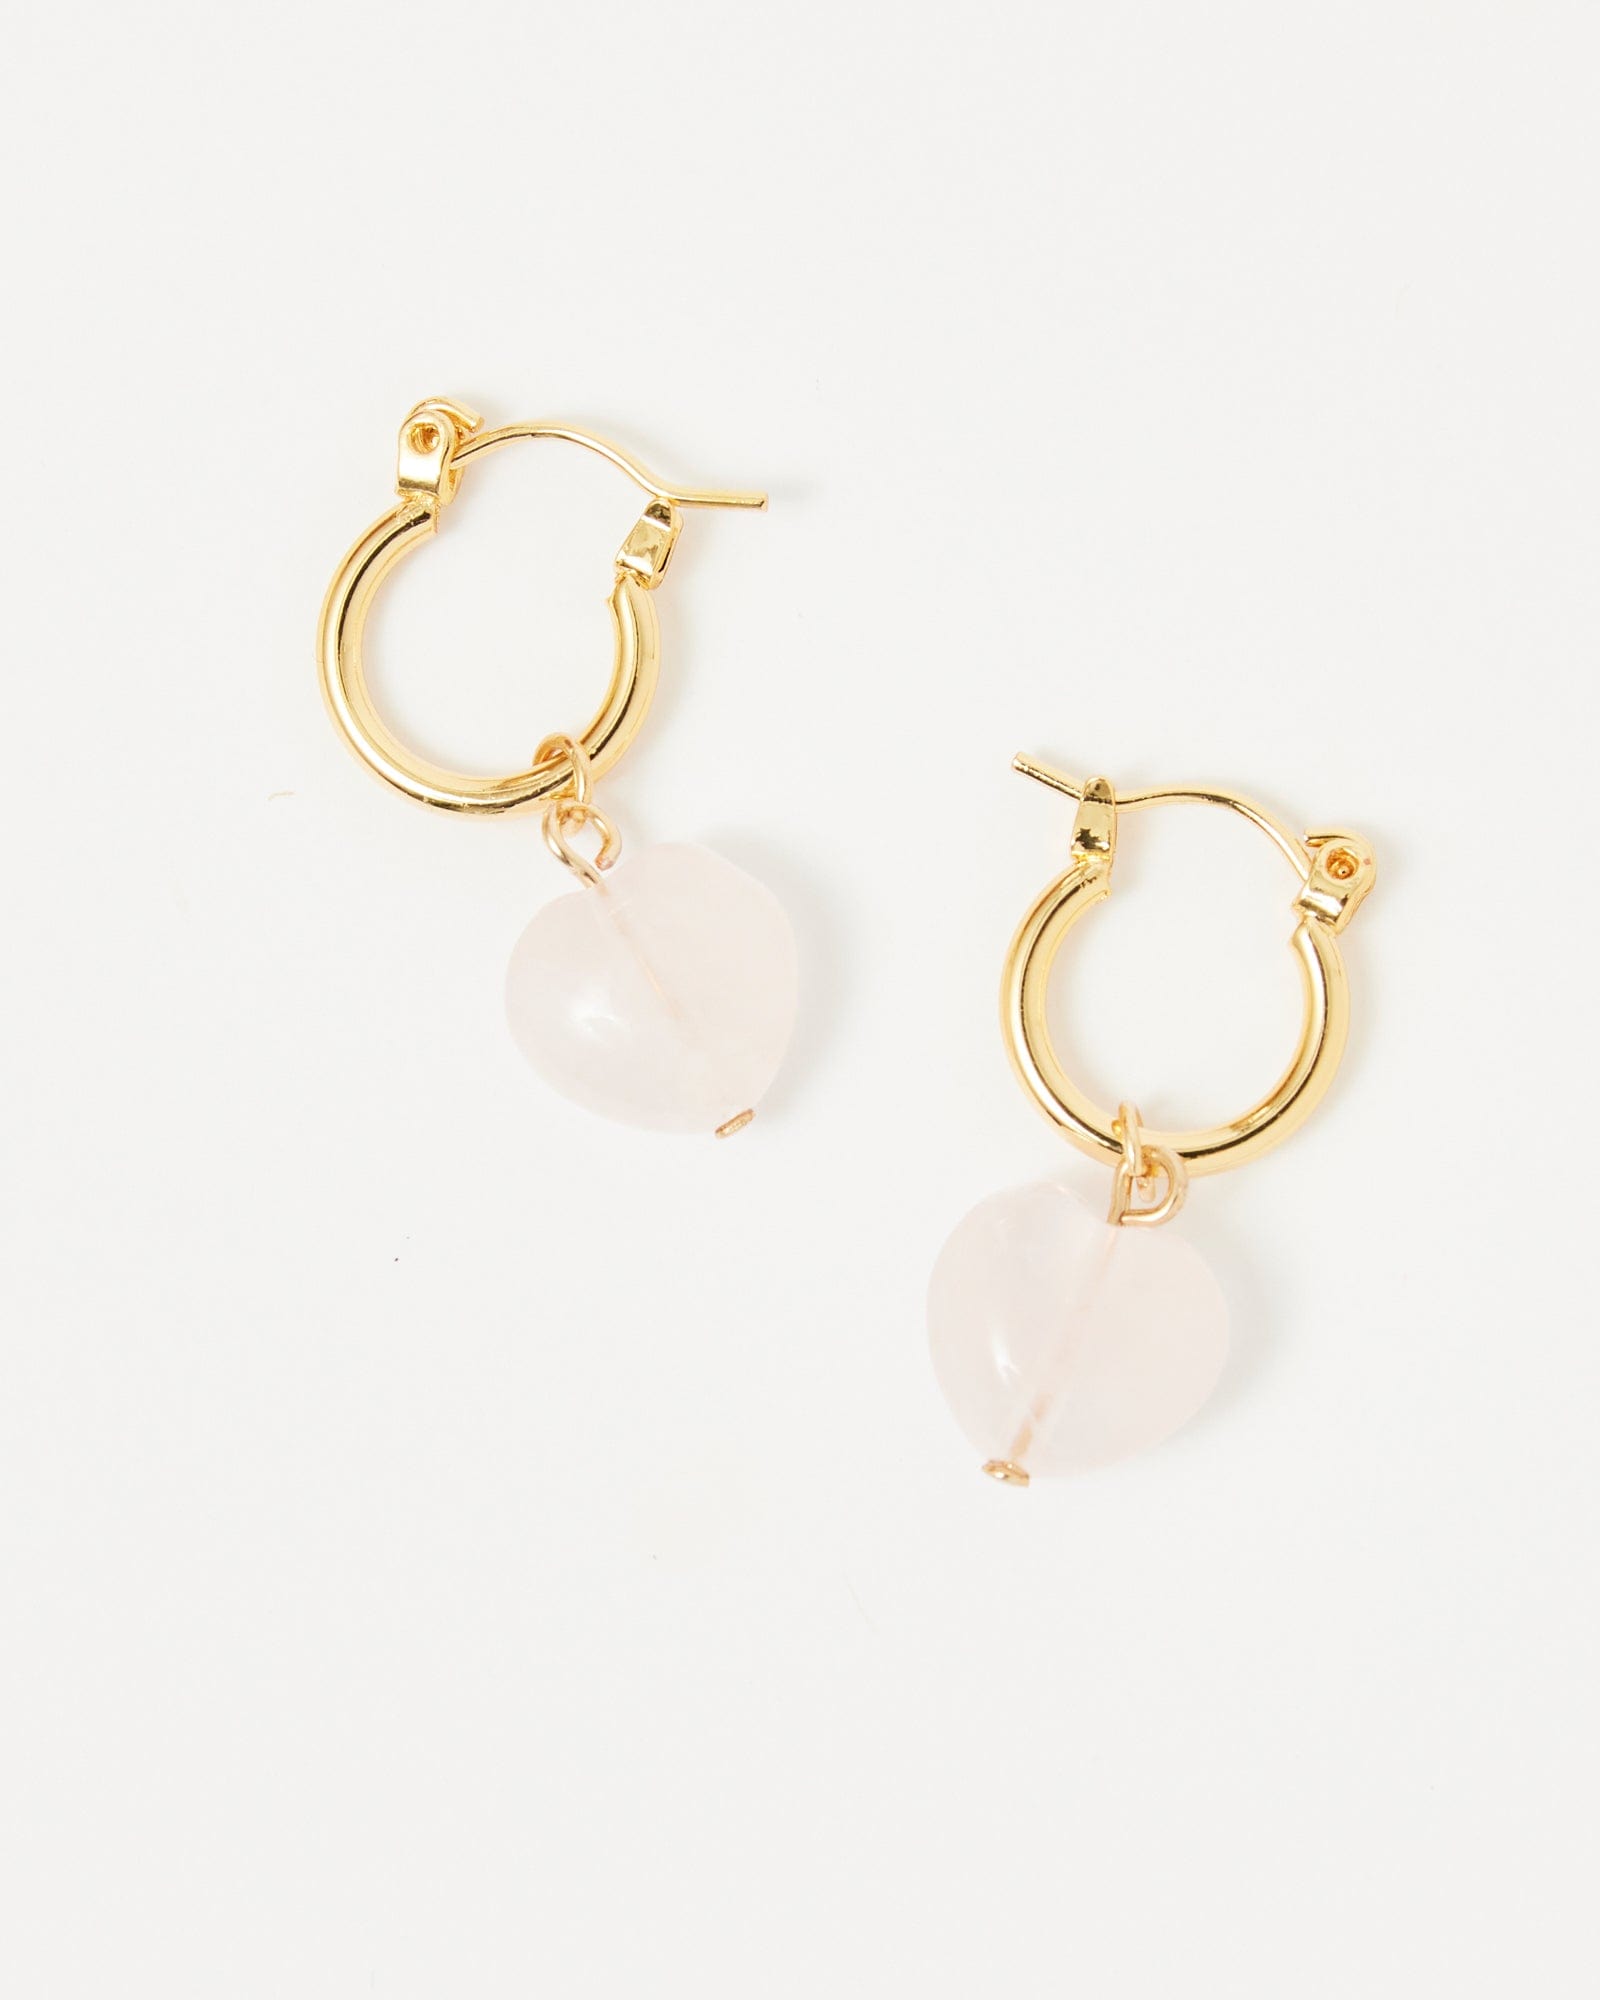 Gold huggie hoop earrings with heart shaped rose quartz bead on end.